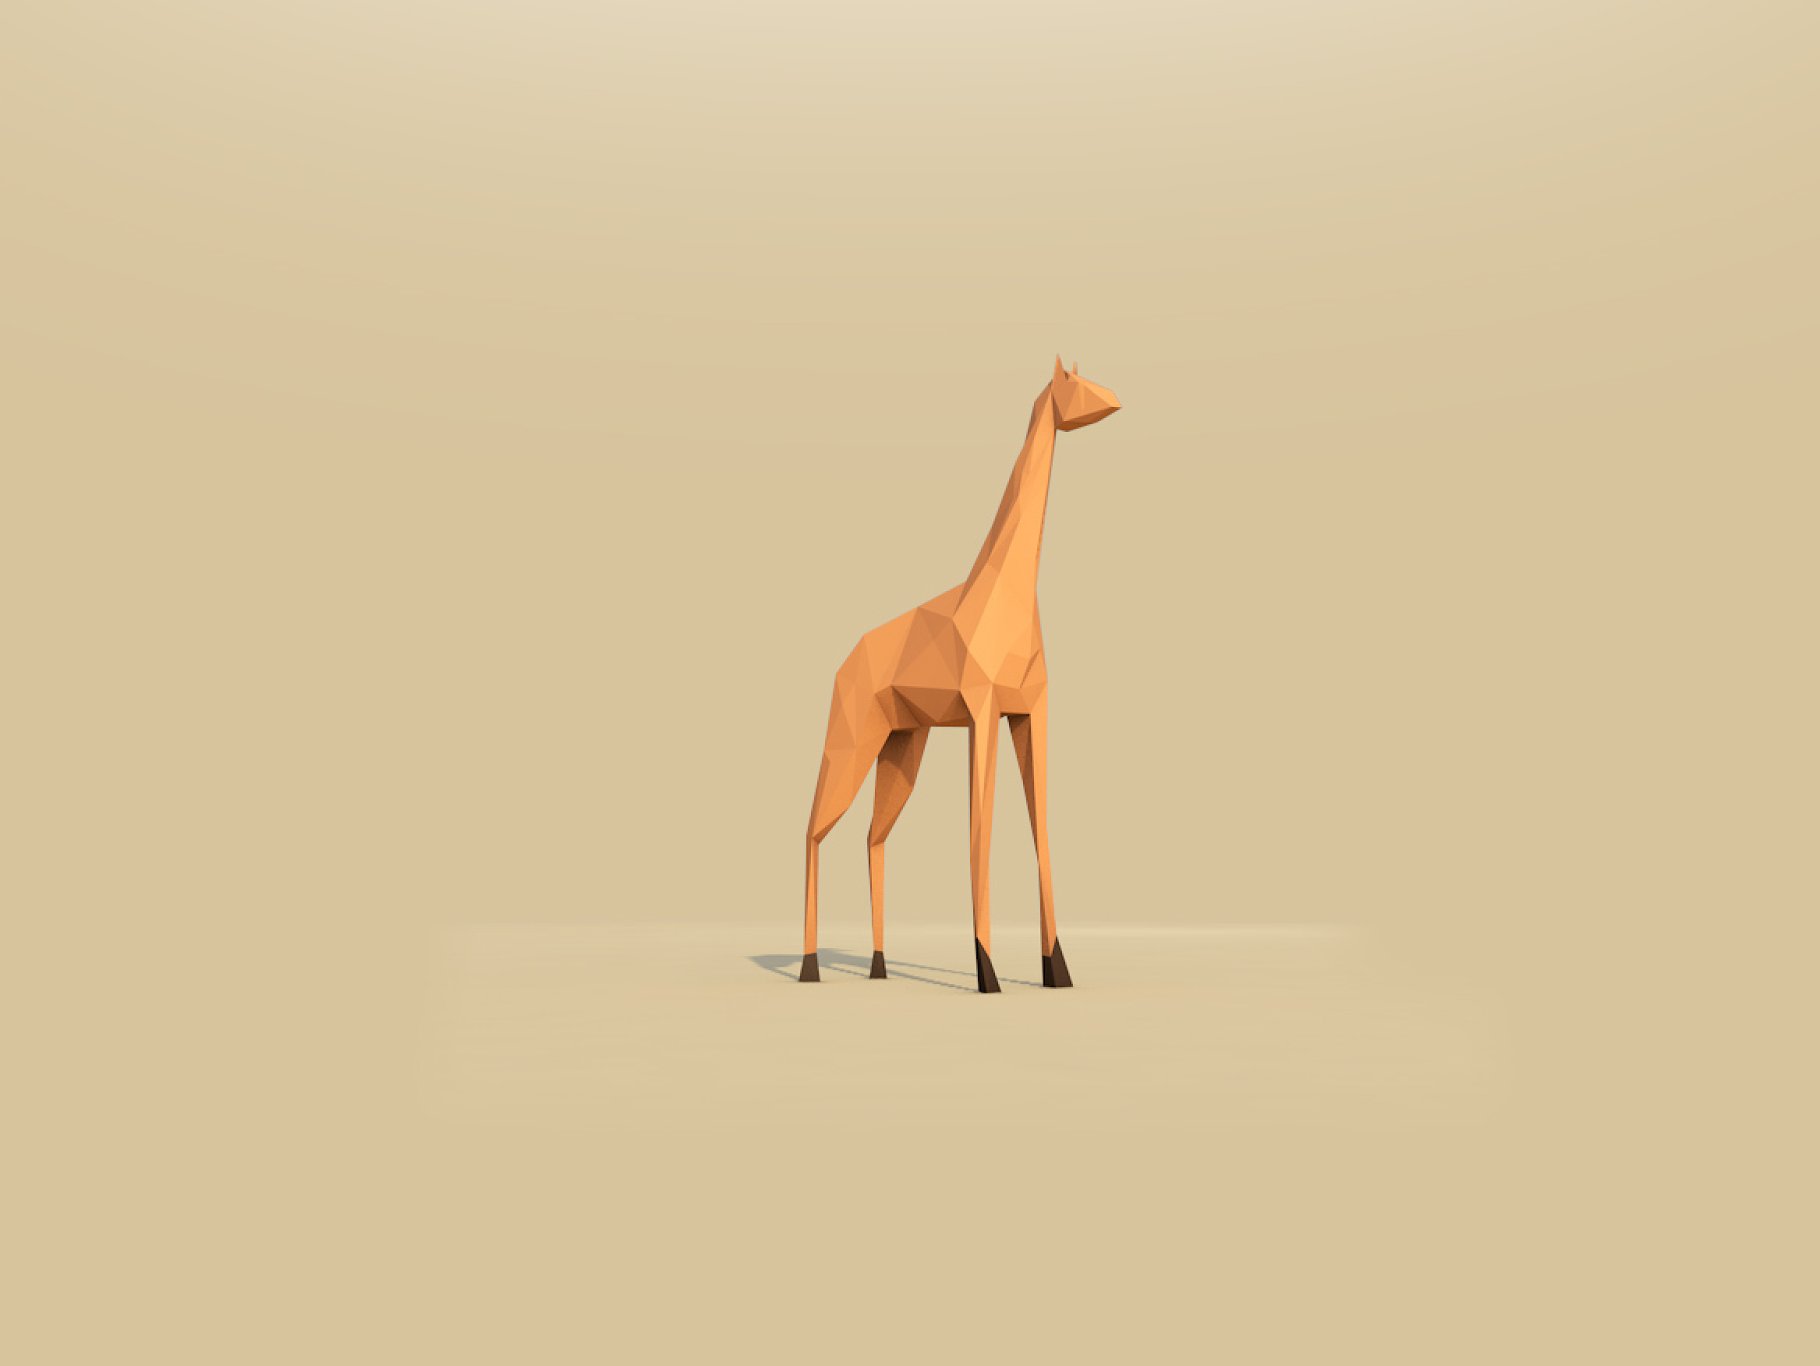 Giraffe colorful mockup on a beige background.